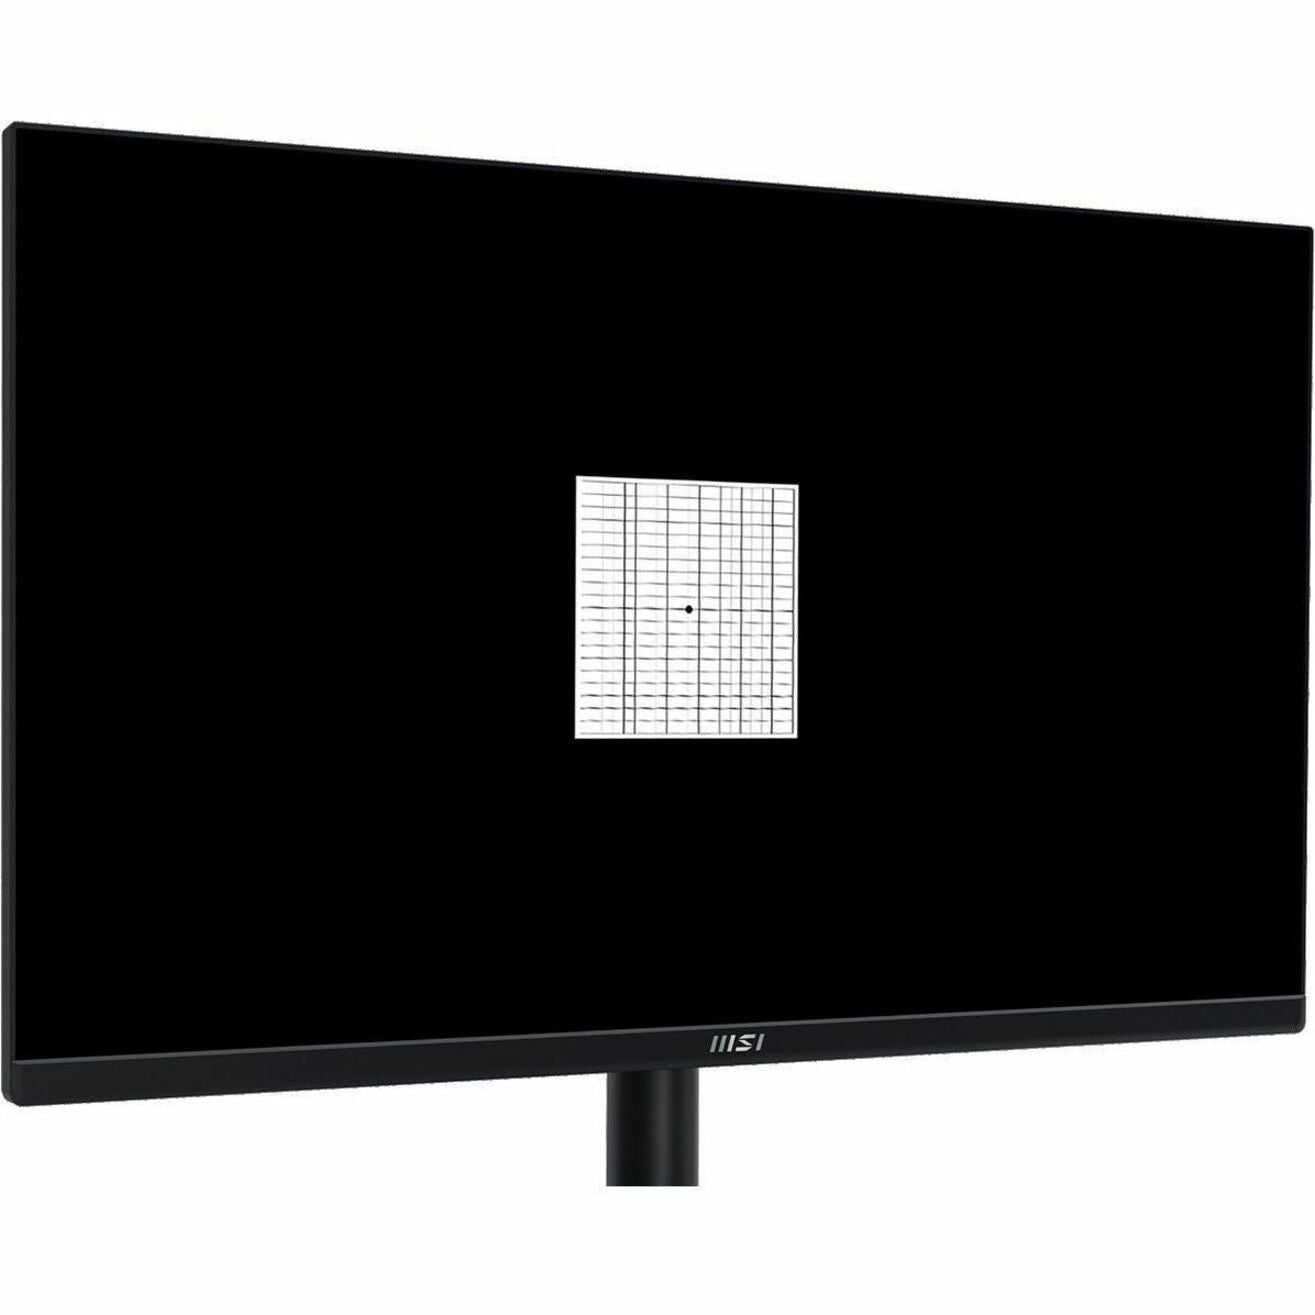 MSI Pro MP245V 24" Class Full HD LCD Monitor - 16:9 - Matte Black (PROMP245V)